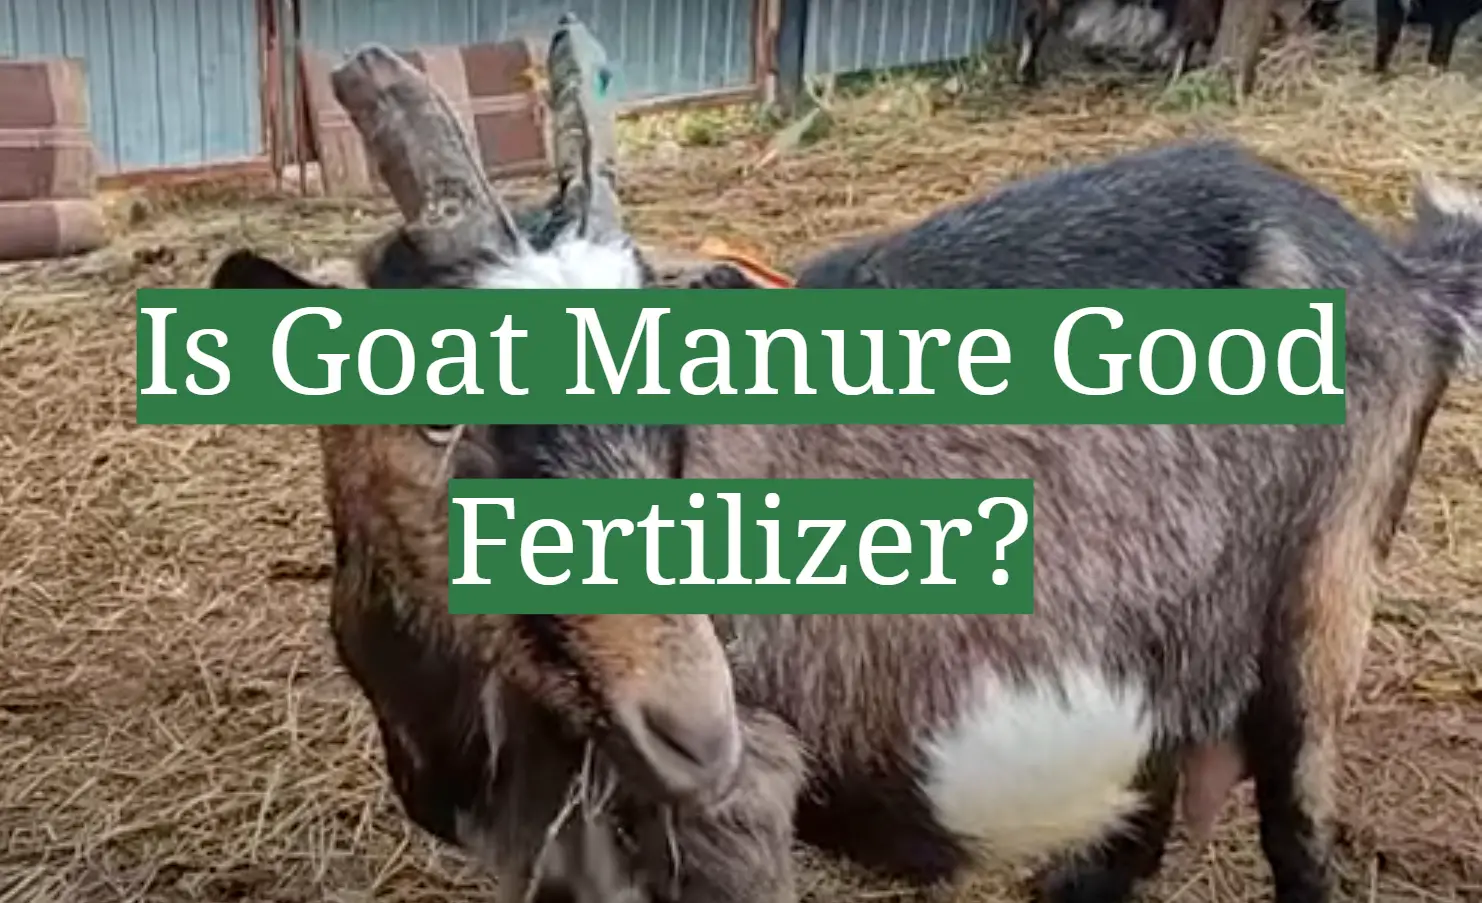 Is Goat Manure Good Fertilizer?